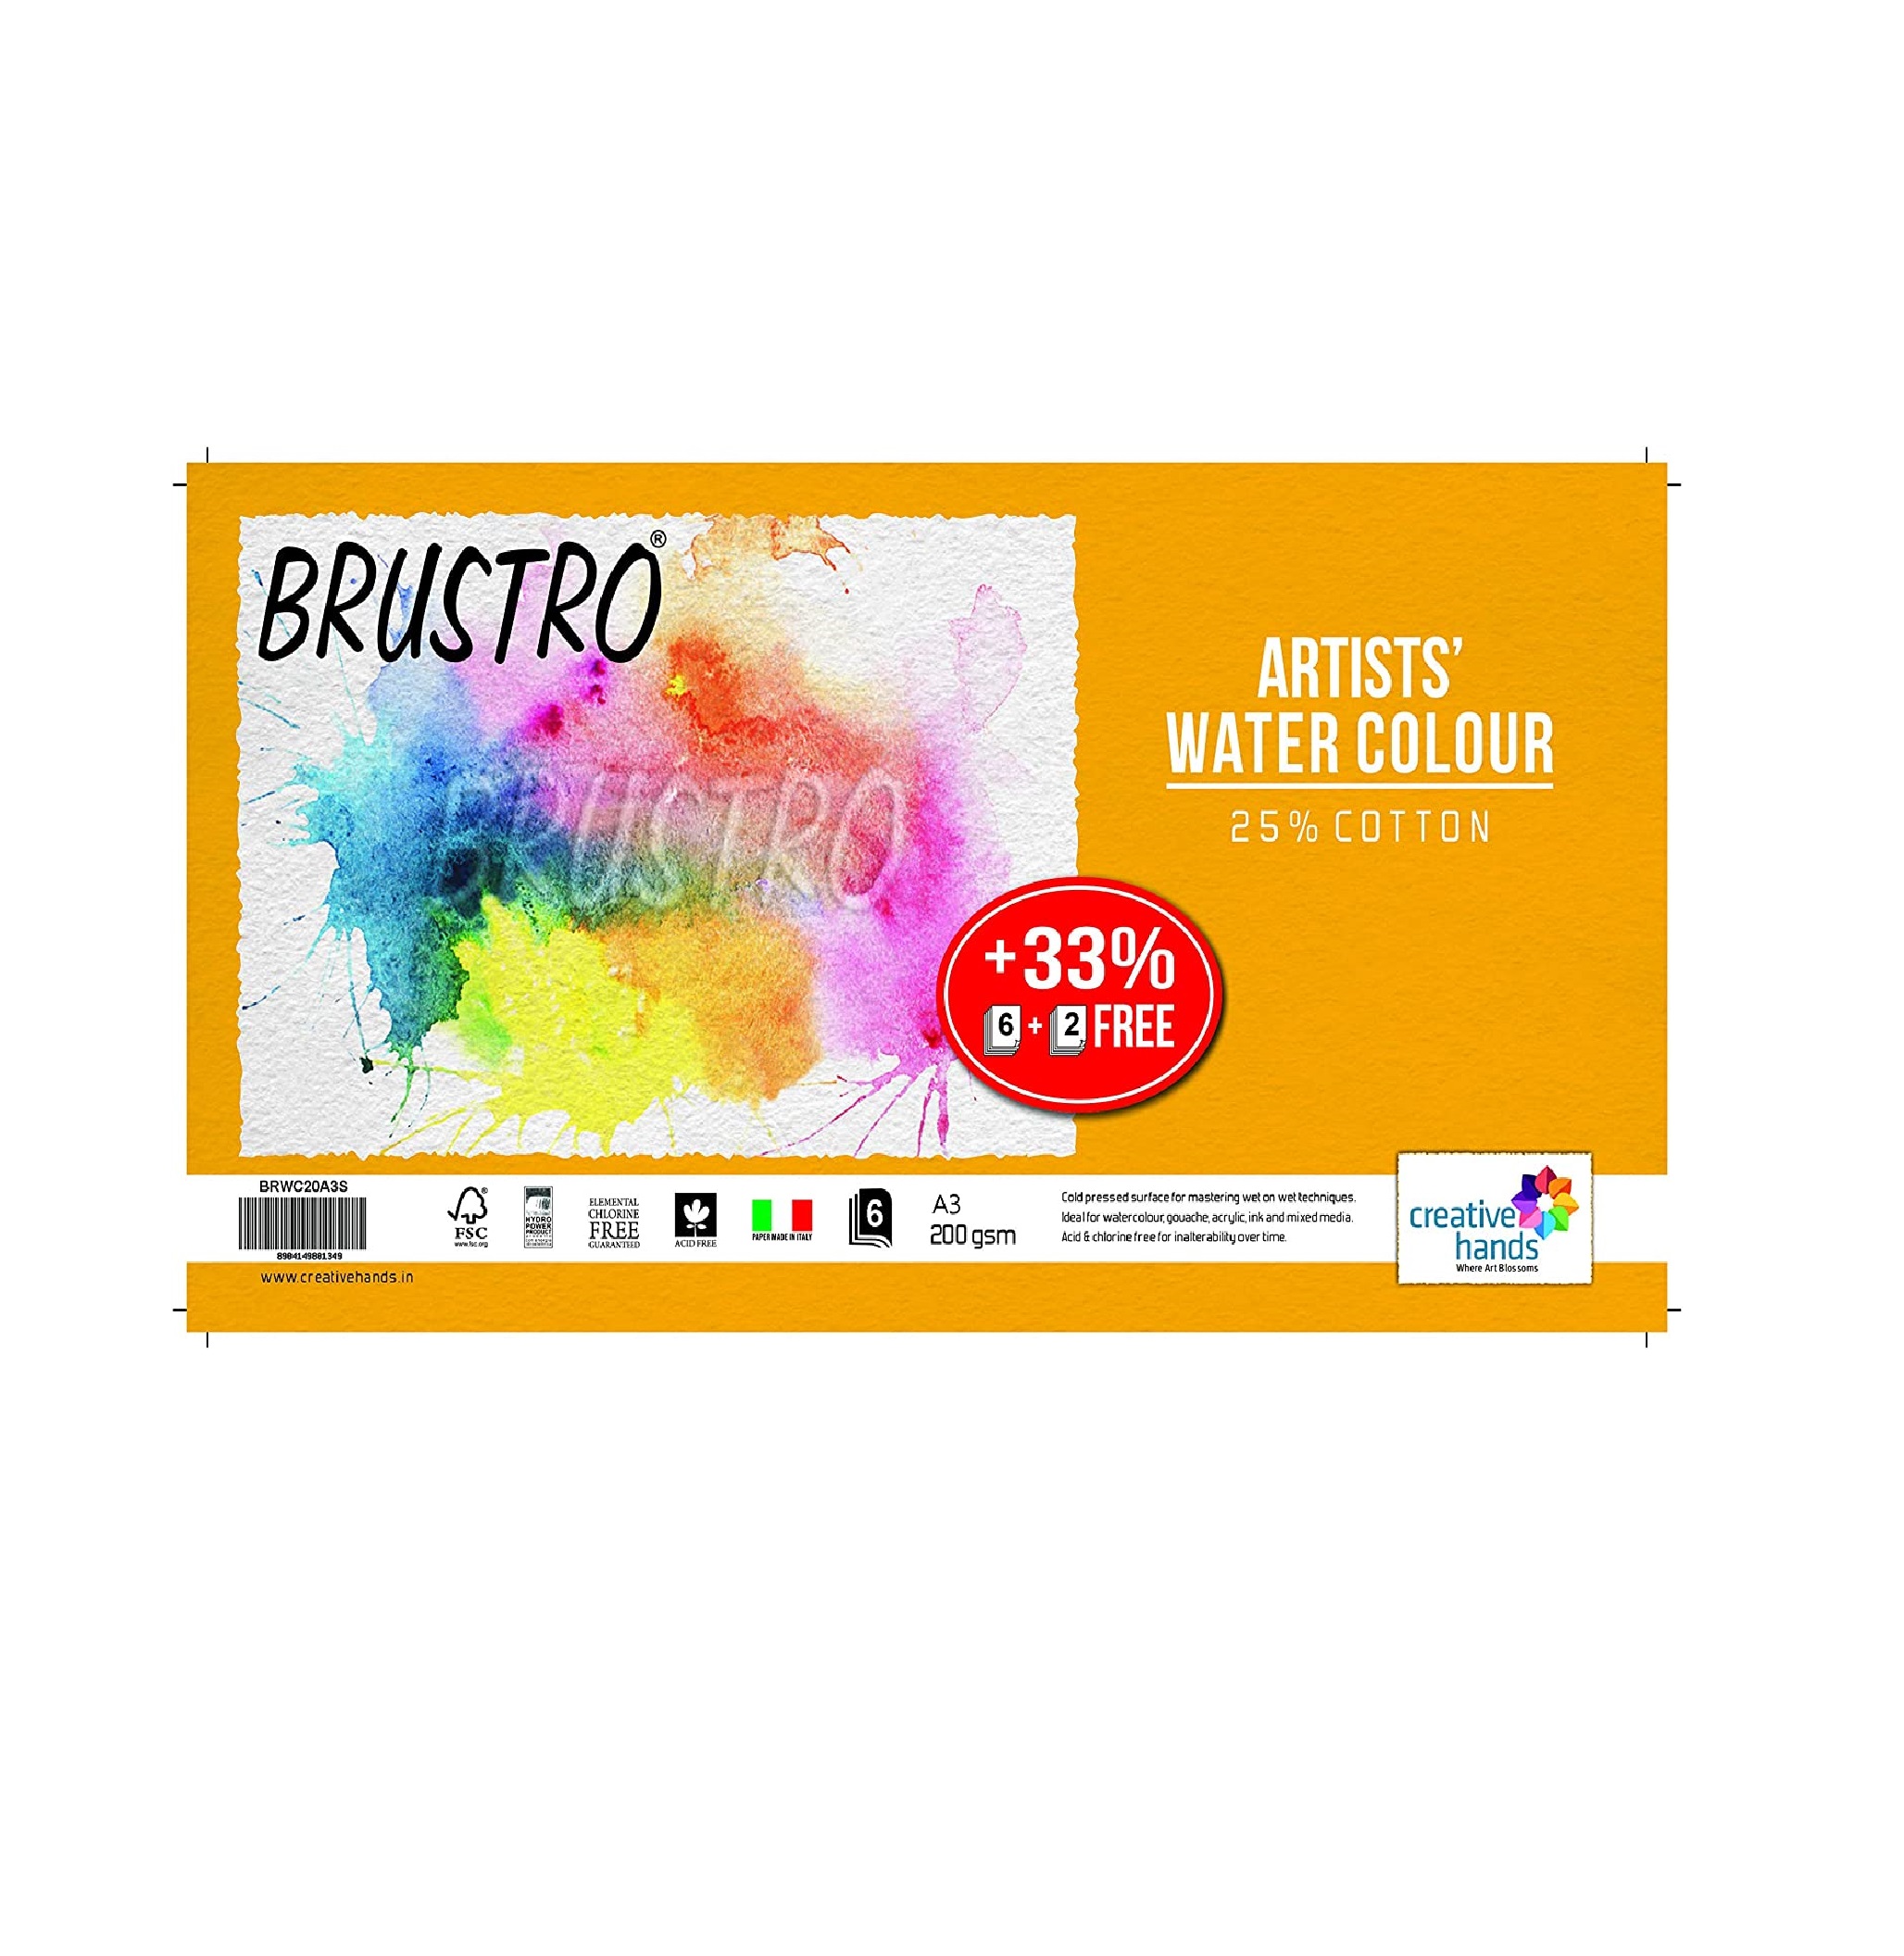 Brustro Artists Watercolour Paper (25% Cotton) - 200 Gsm - A3